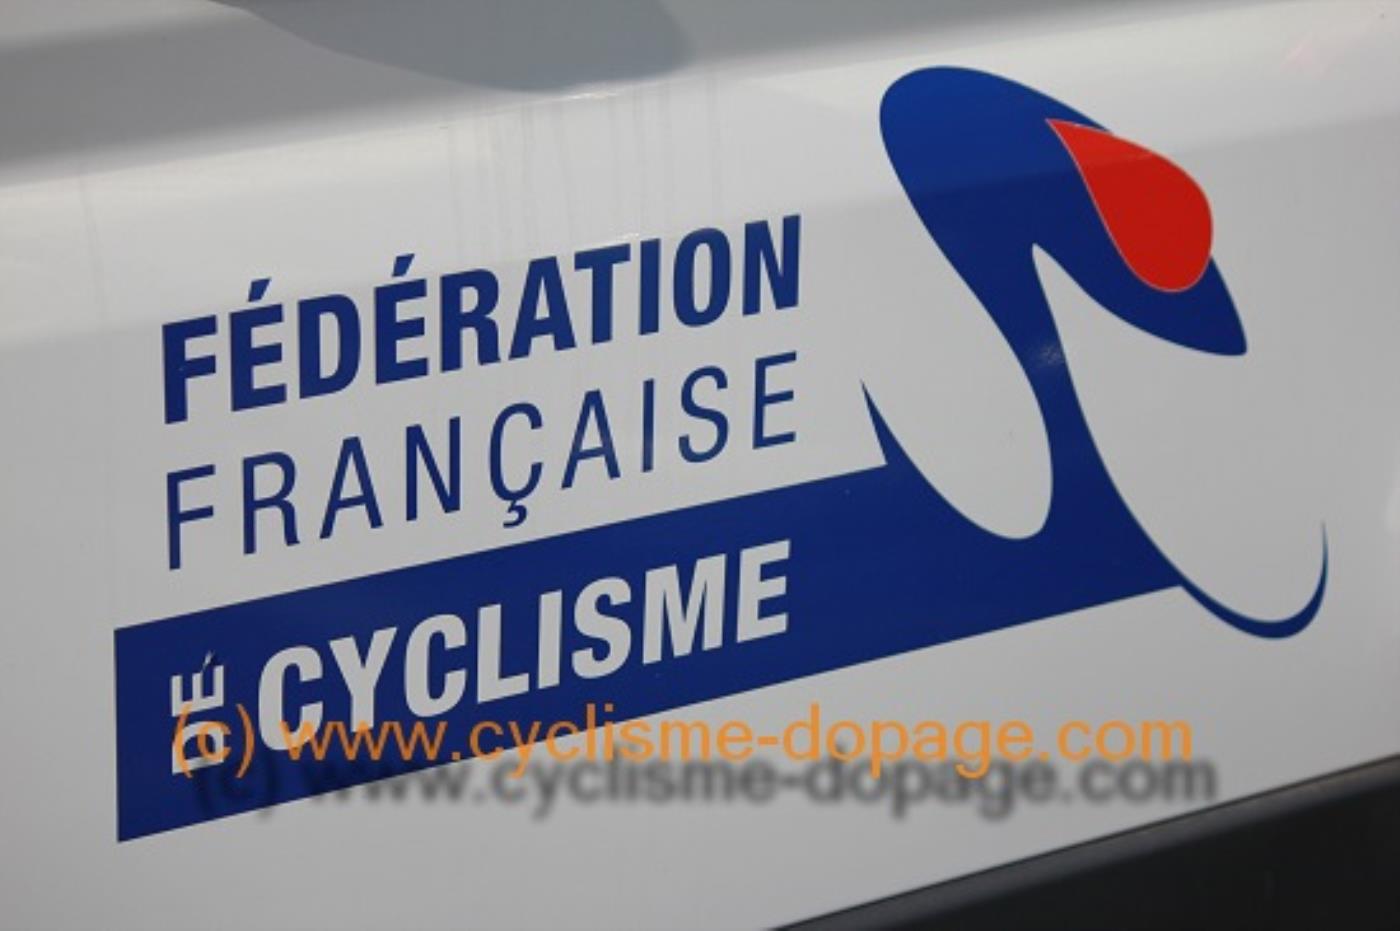 Fdration Franaise de Cyclisme Logo